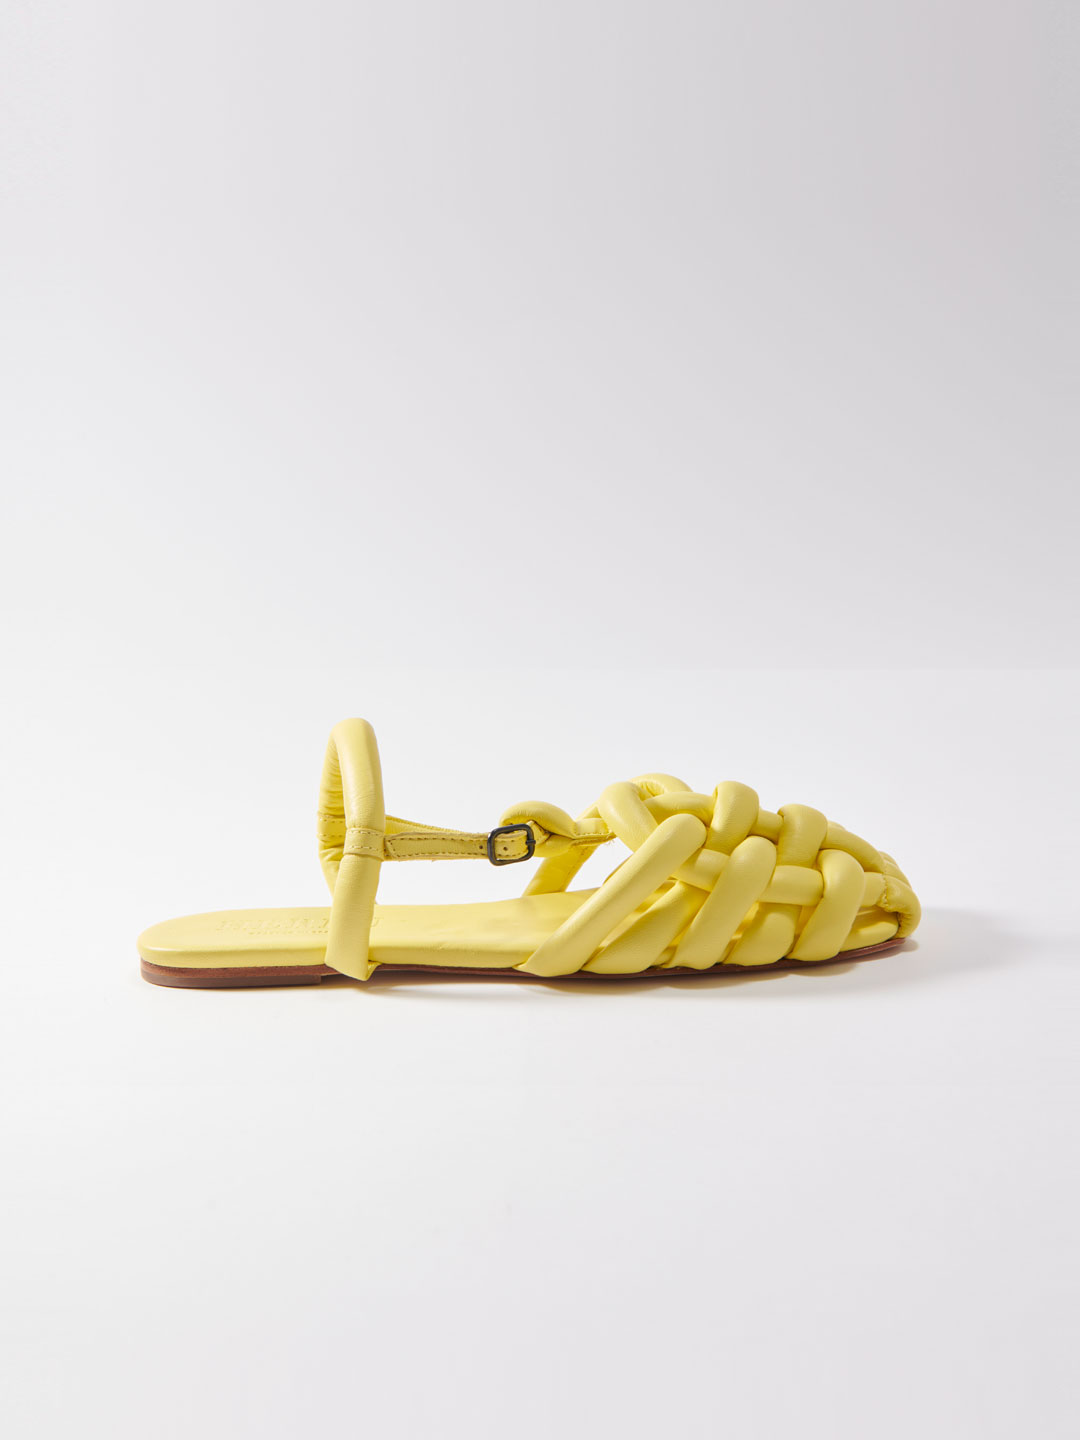 Cabersa Padded Fisheman Sandals - Light Yellow